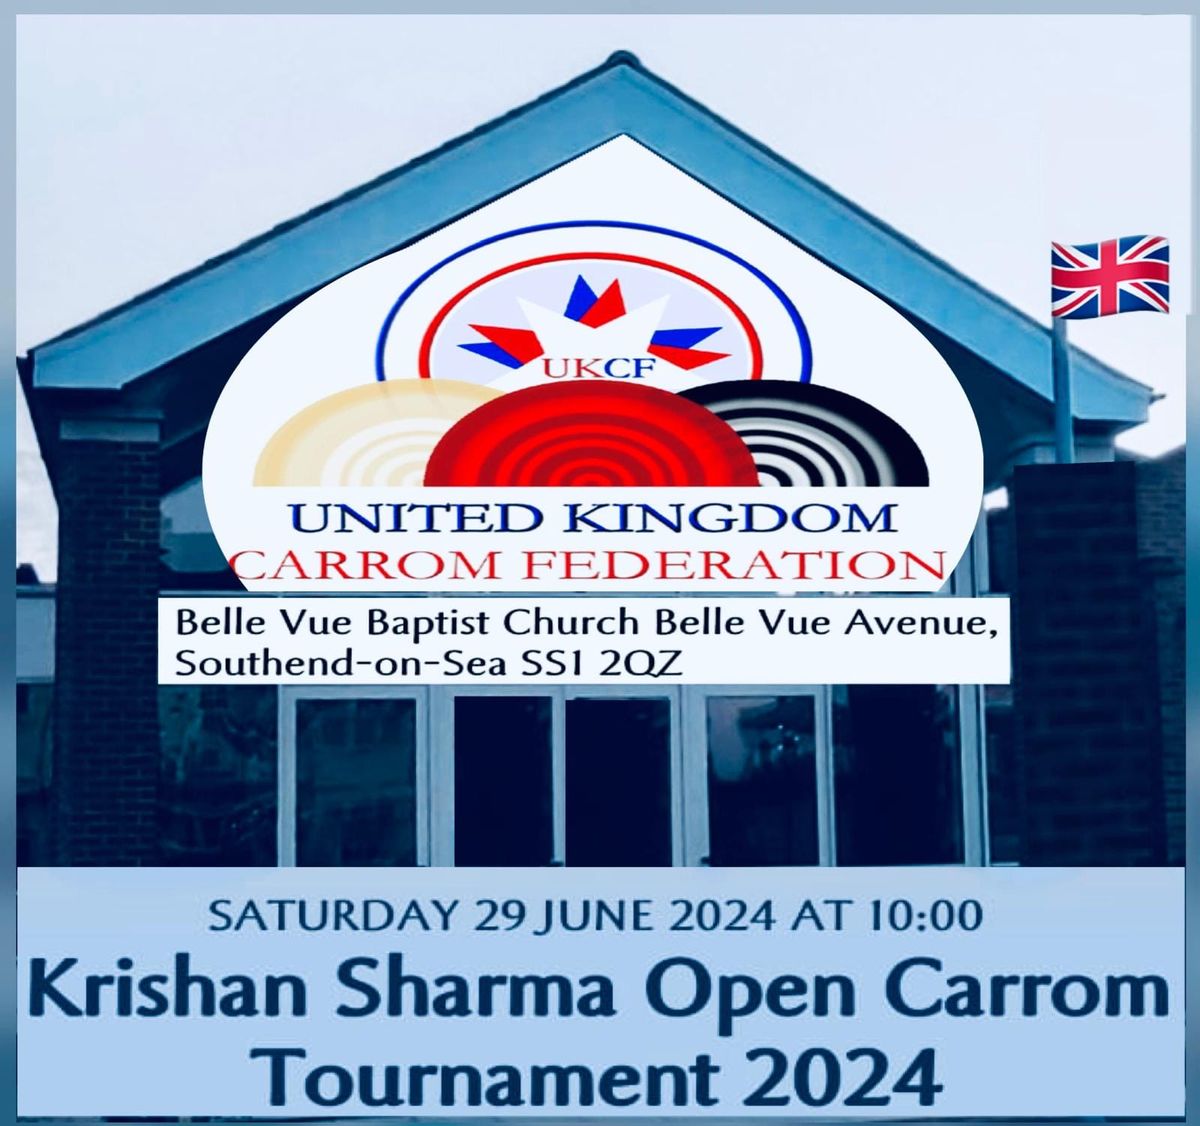 Krishan Sharma Open Carrom Tournament 2024